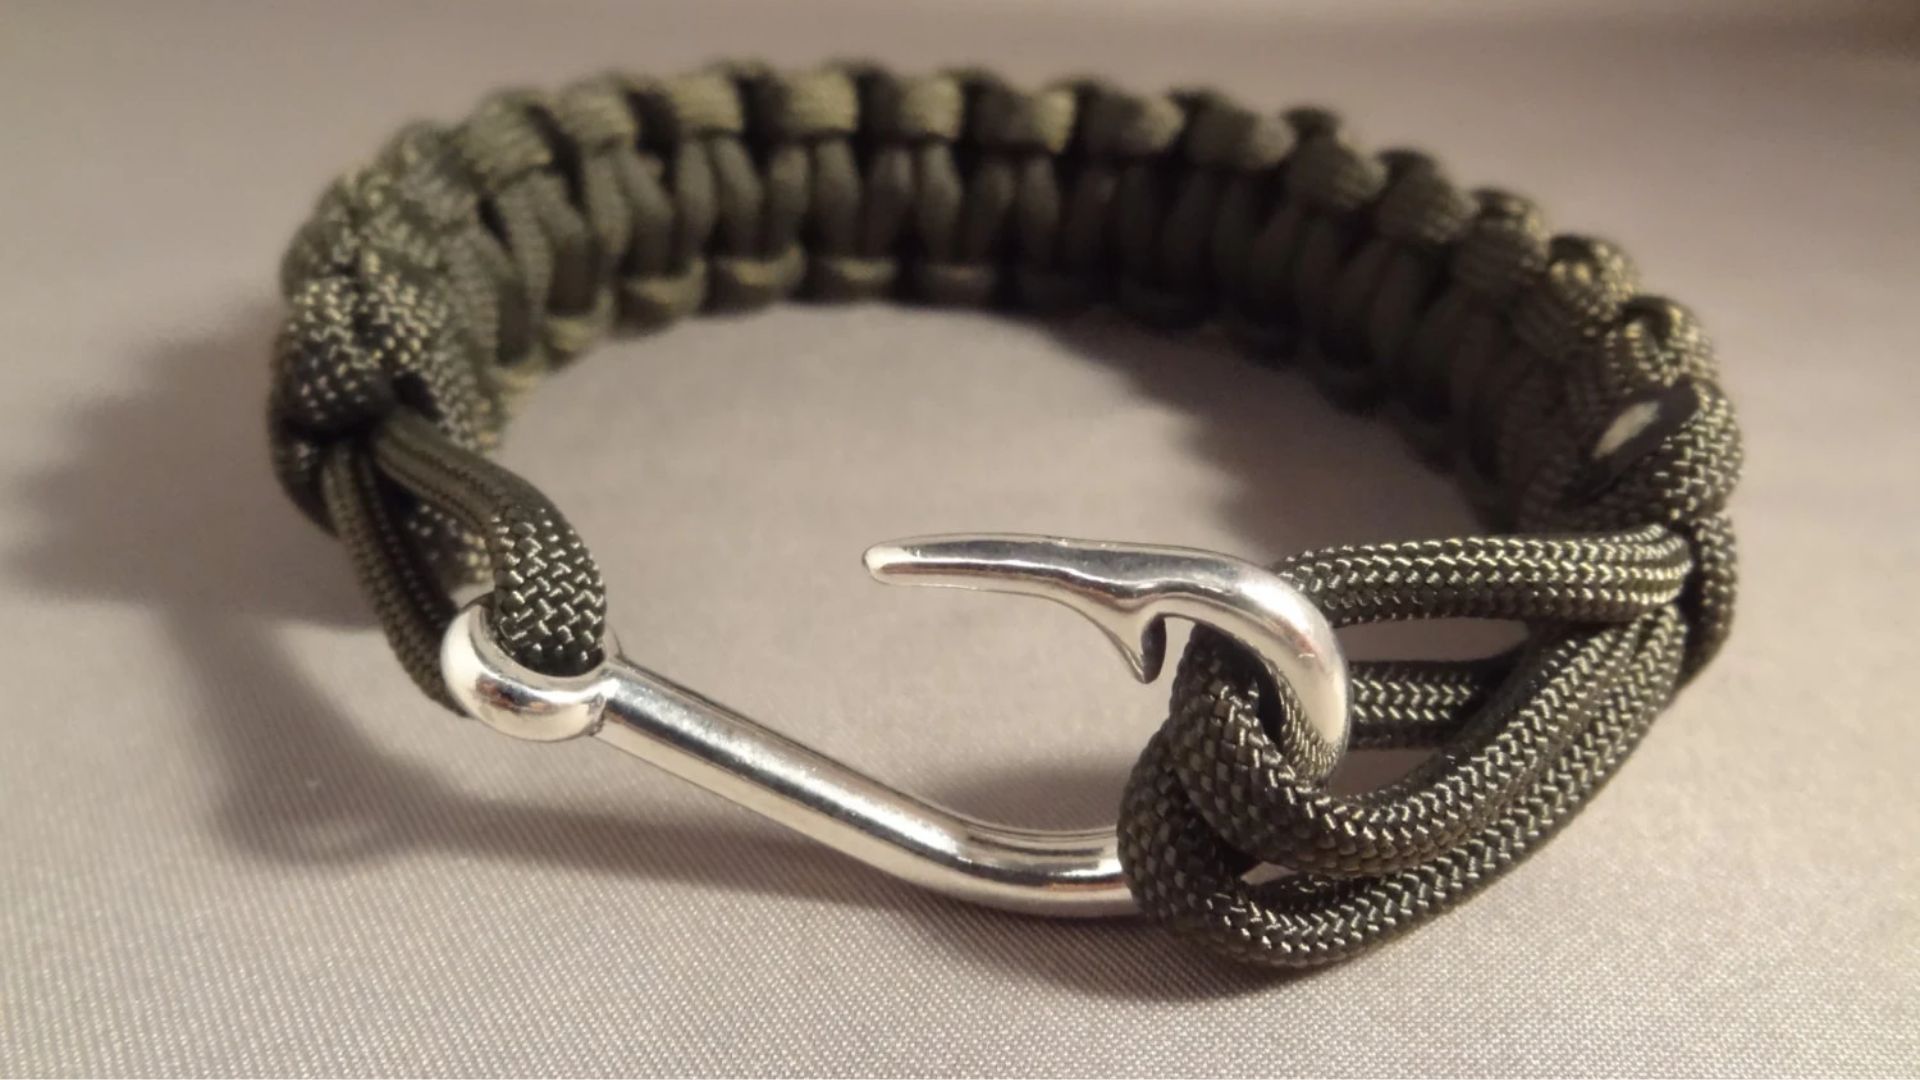 Fish Hook Bracelets - A Symbol Of Maritime Culture And Adventure